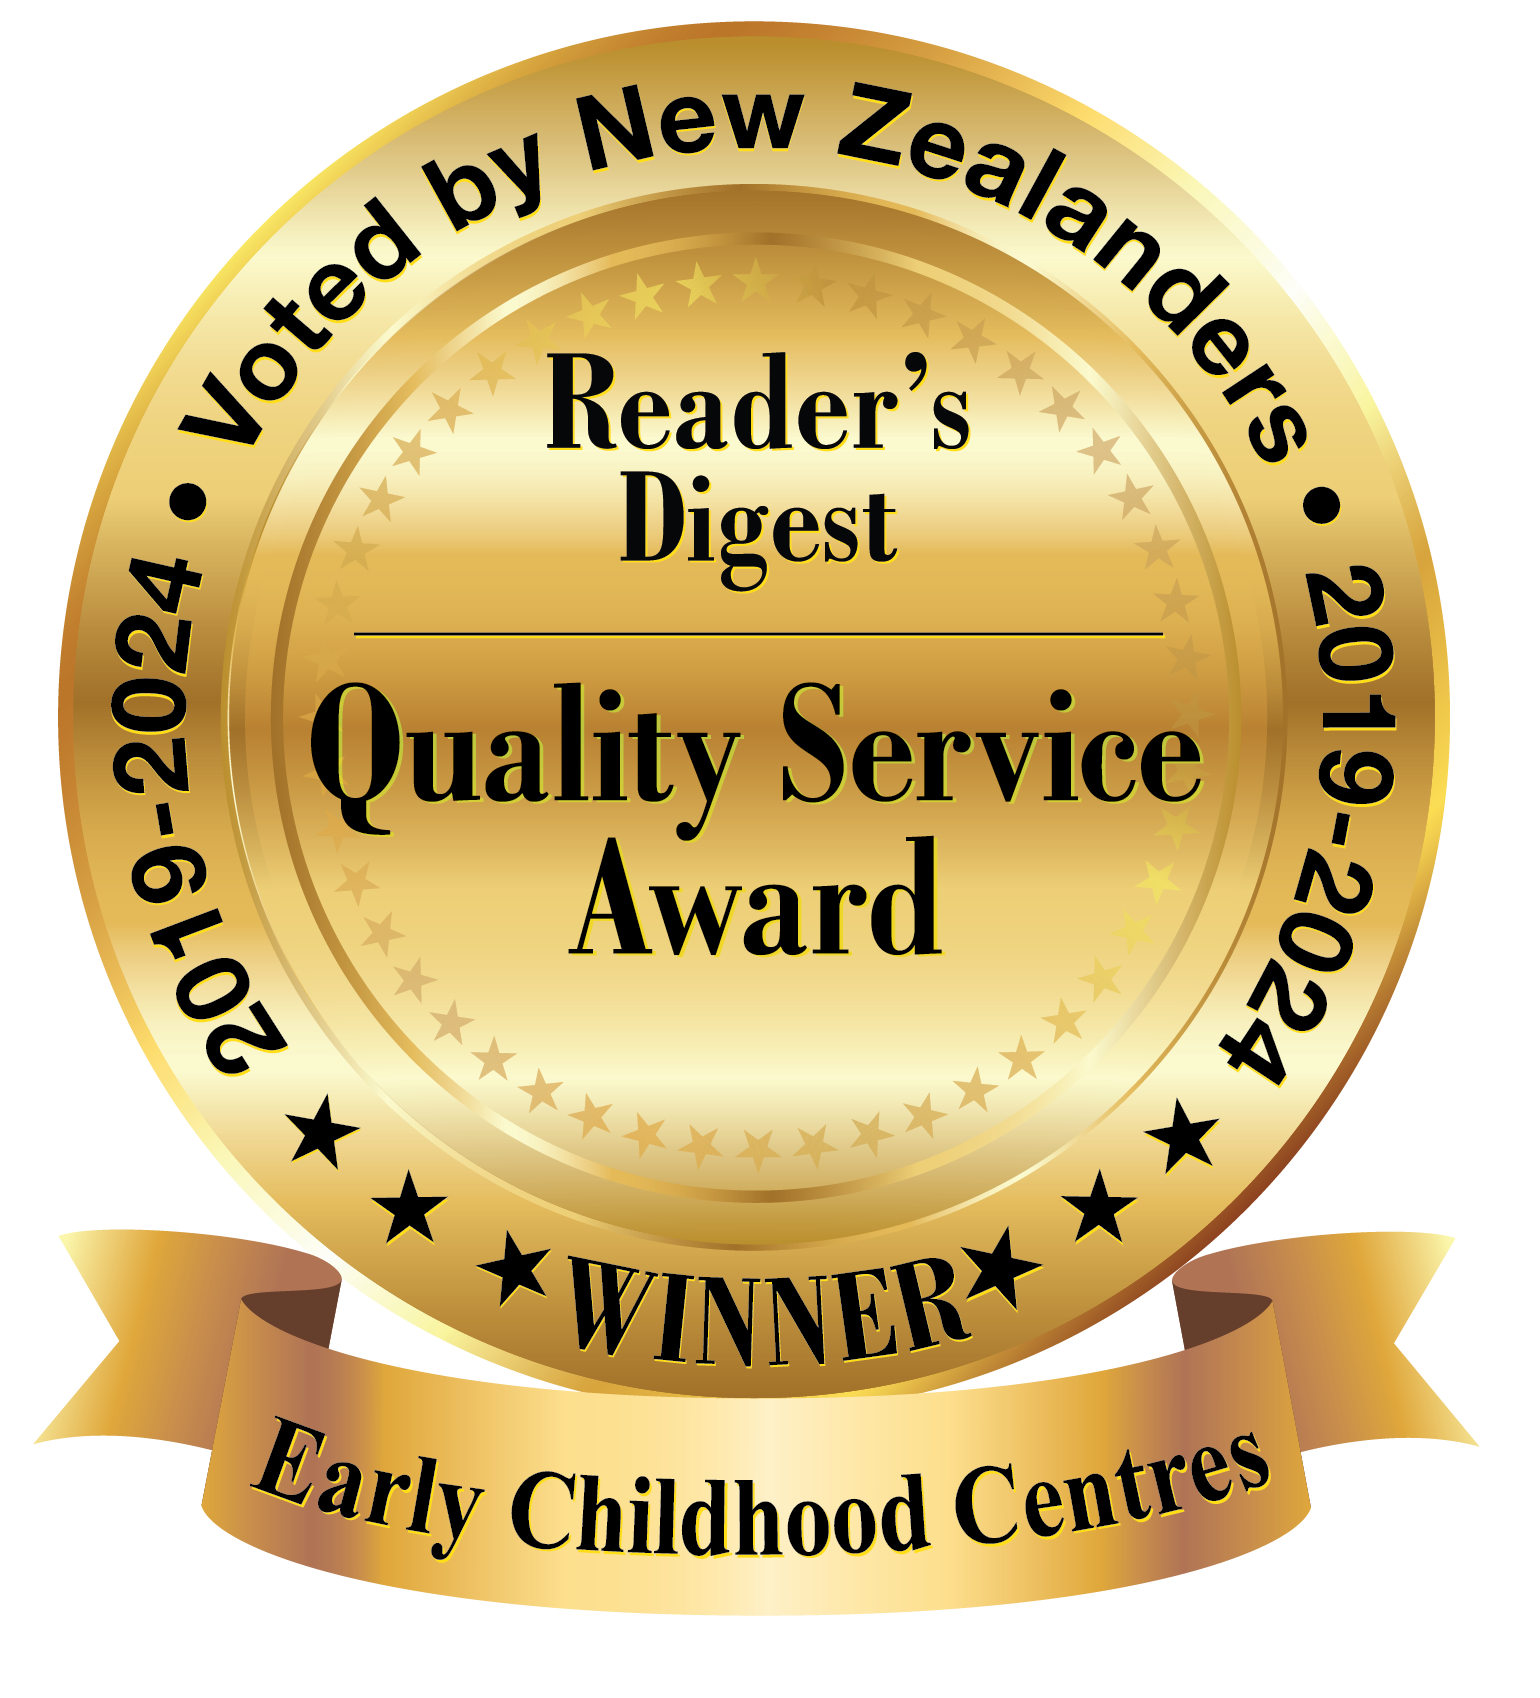 Quality Service Award 